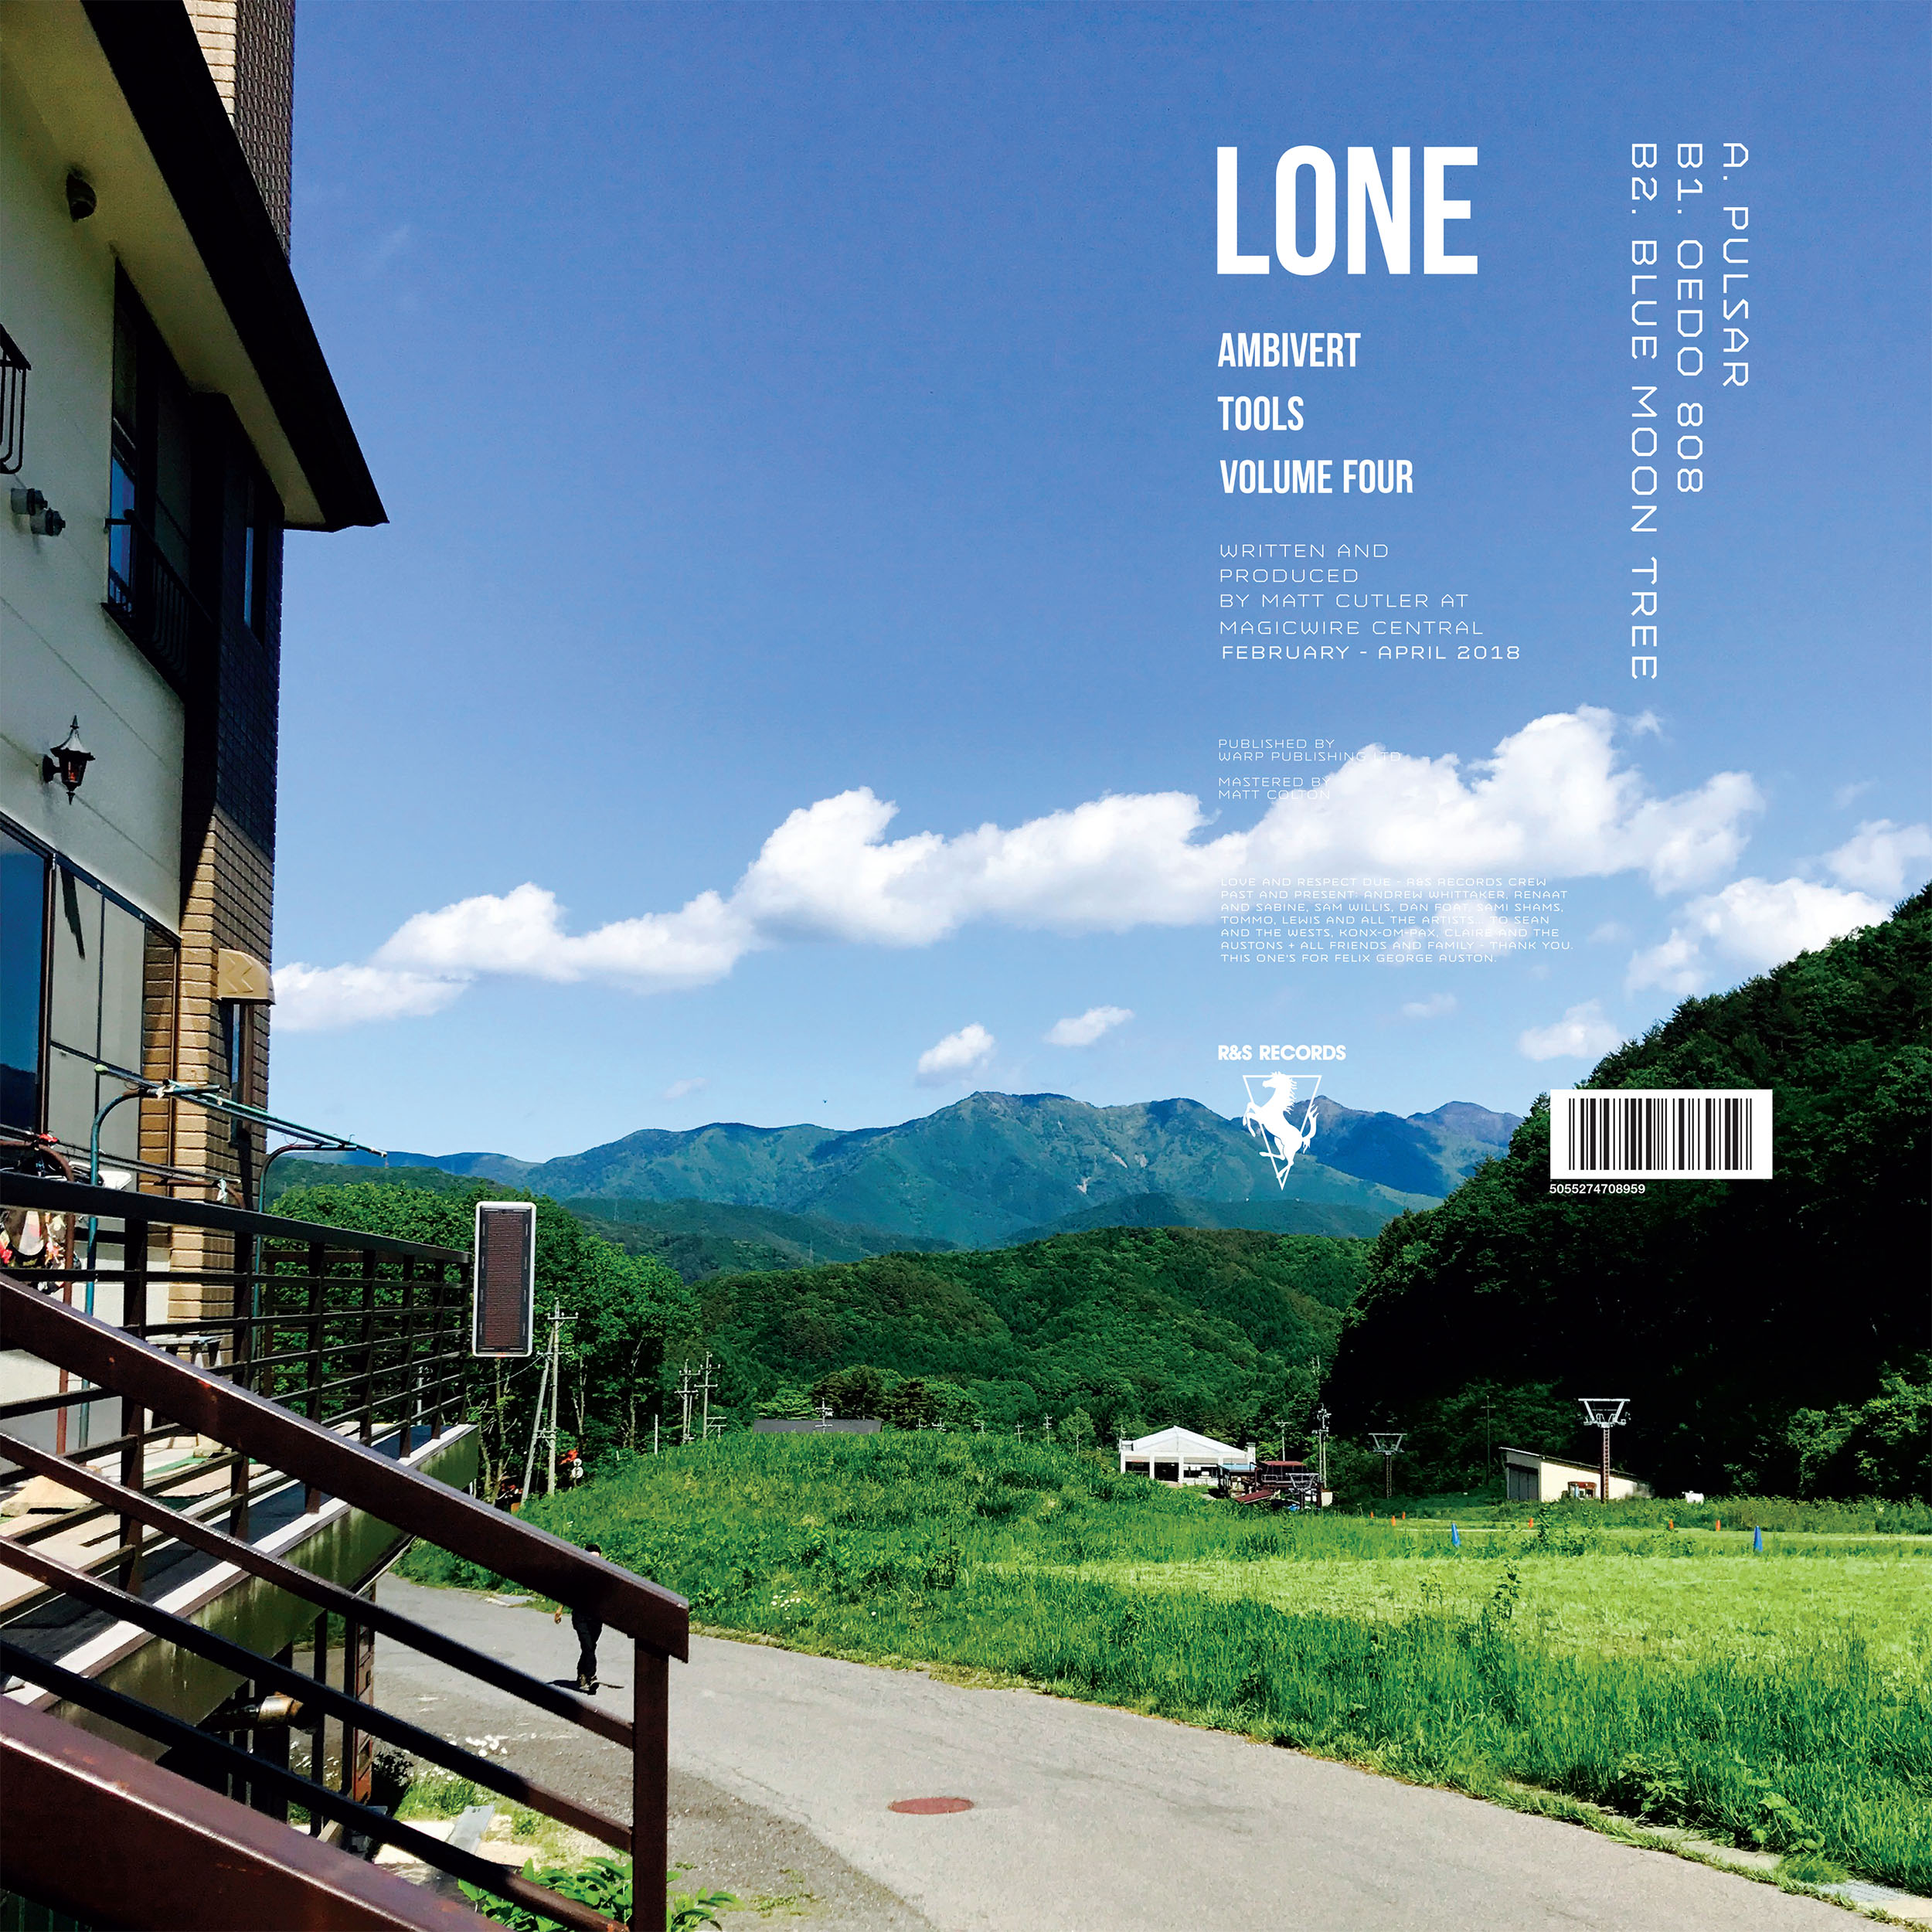 Lone/AMBIVERT TOOLS VOLUME FOUR 12"